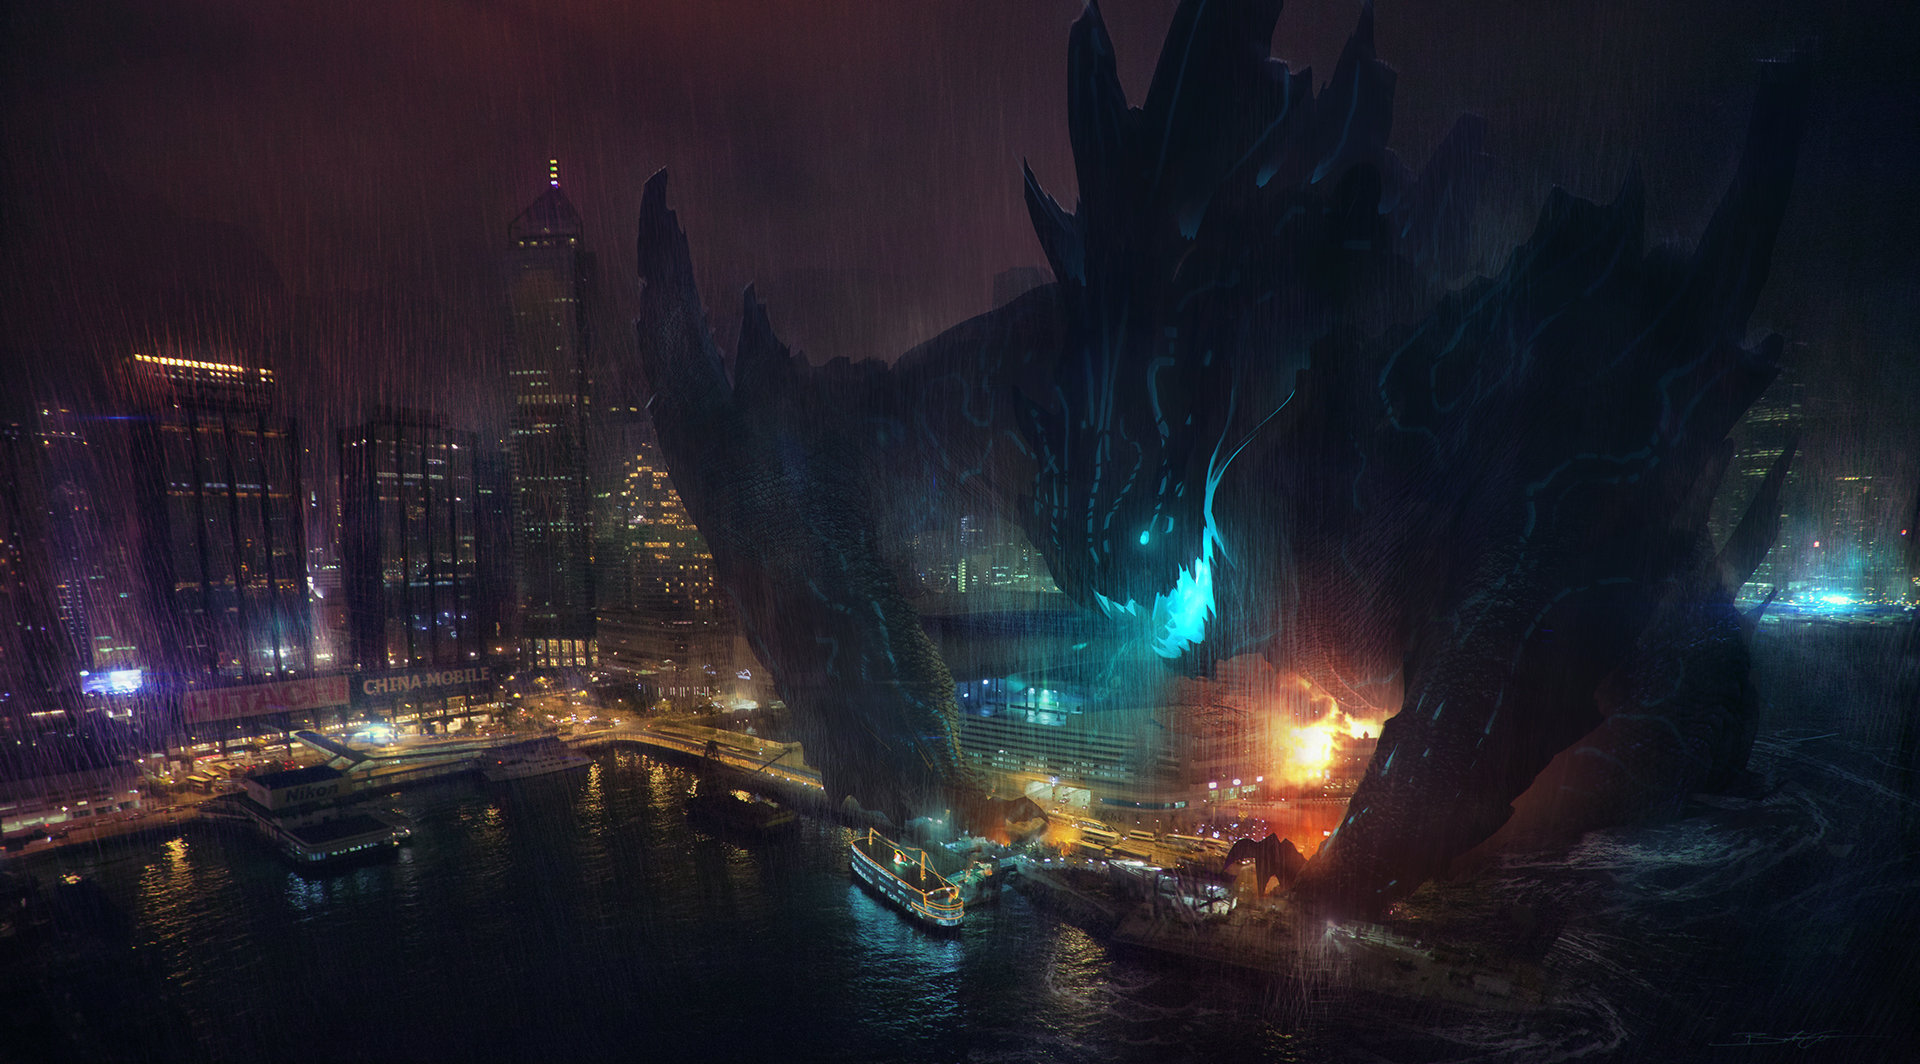 Category 6 Kaiju Requires Urgent Jaeger Intervention